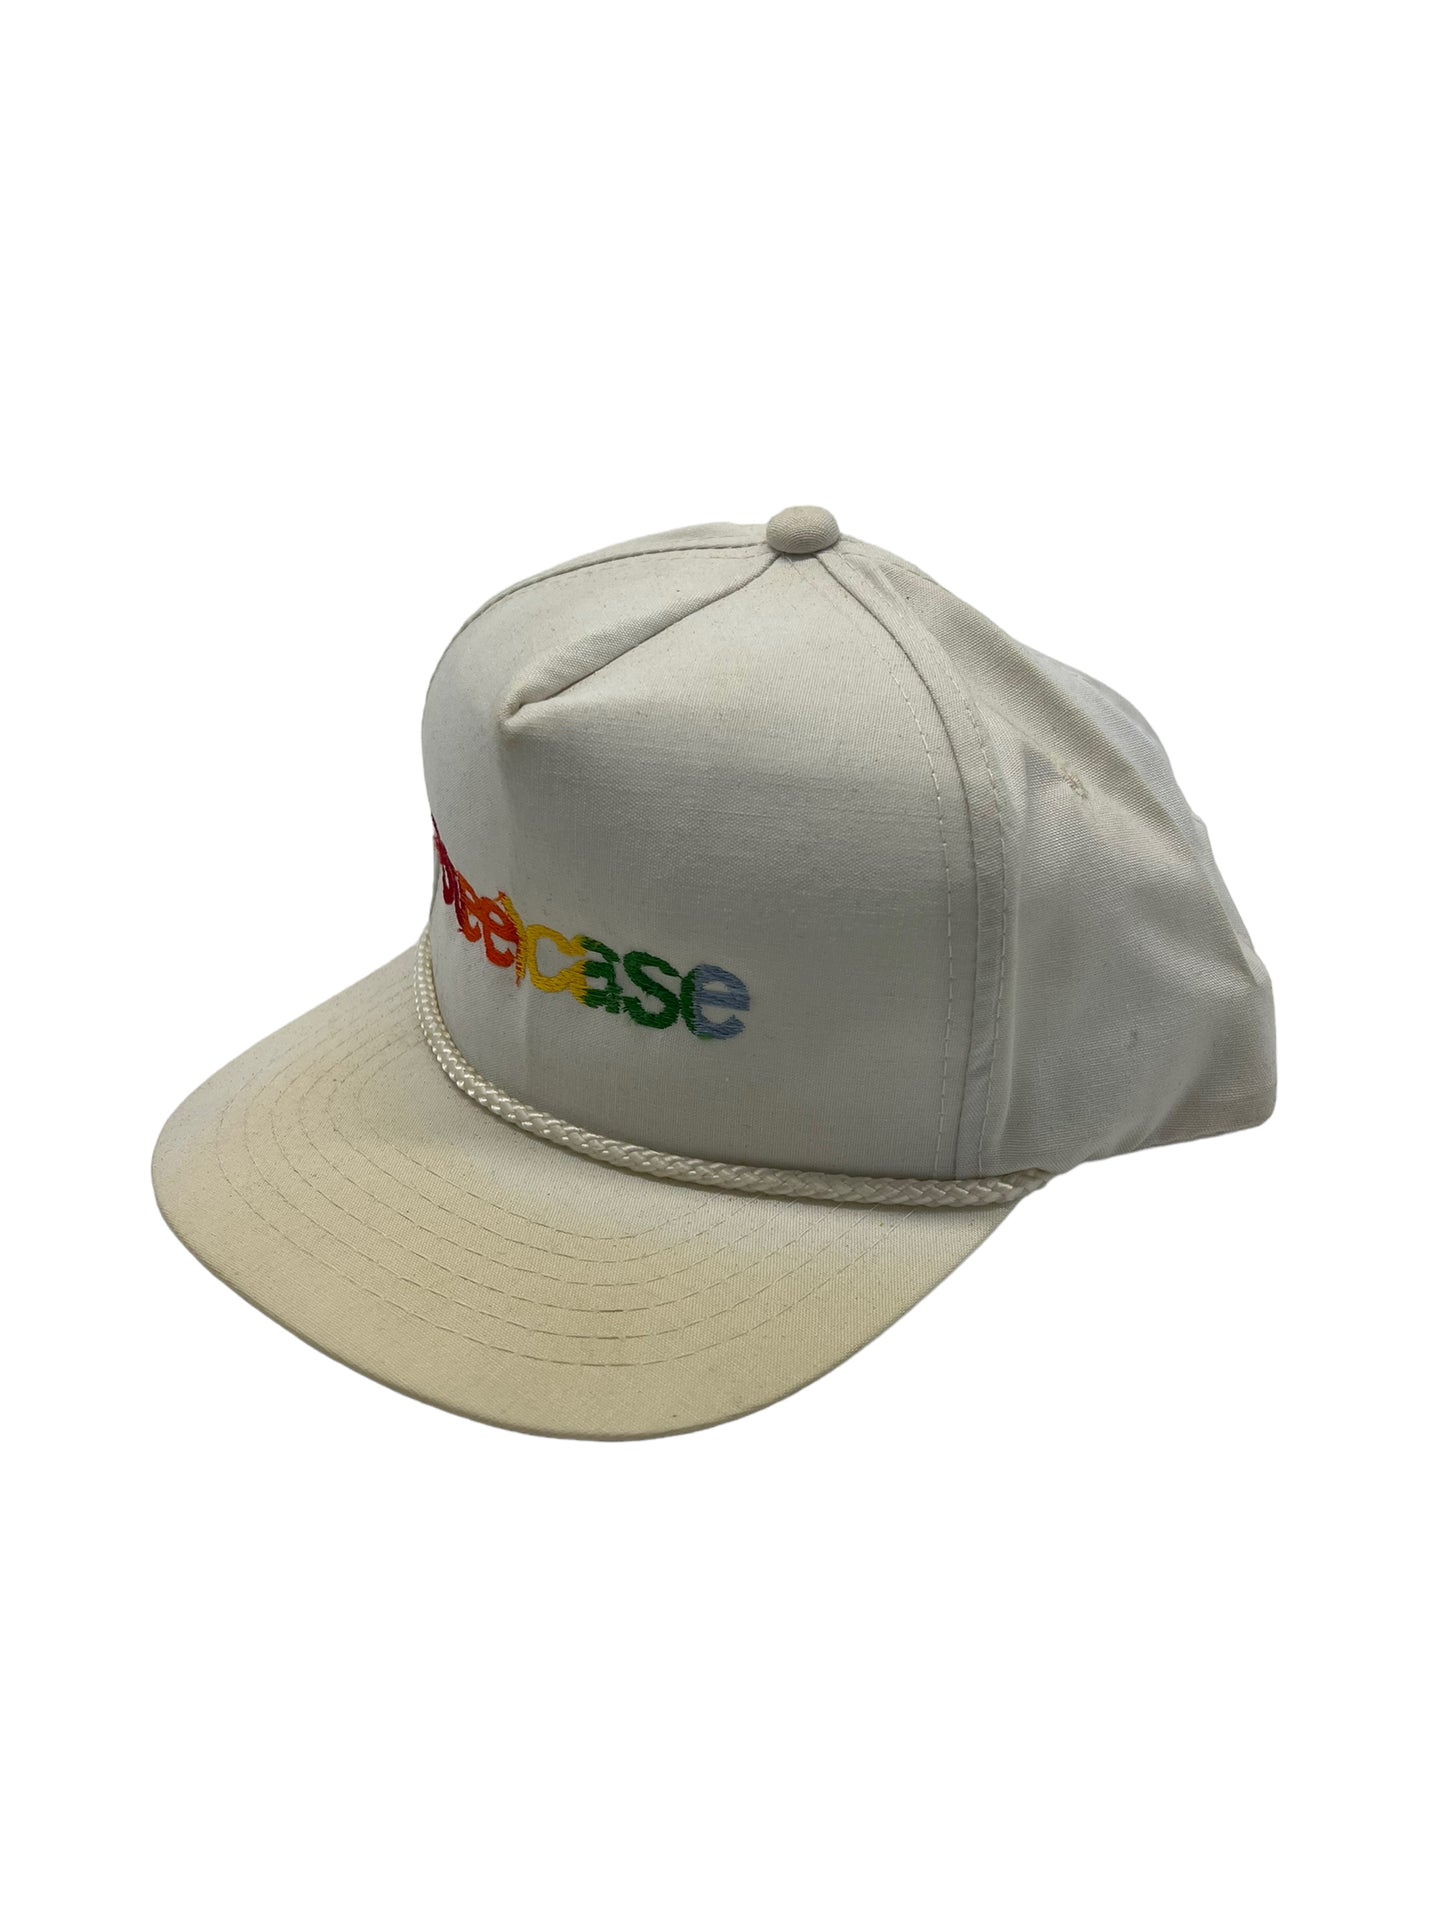 Vtg Steelcase Rainbow Hat